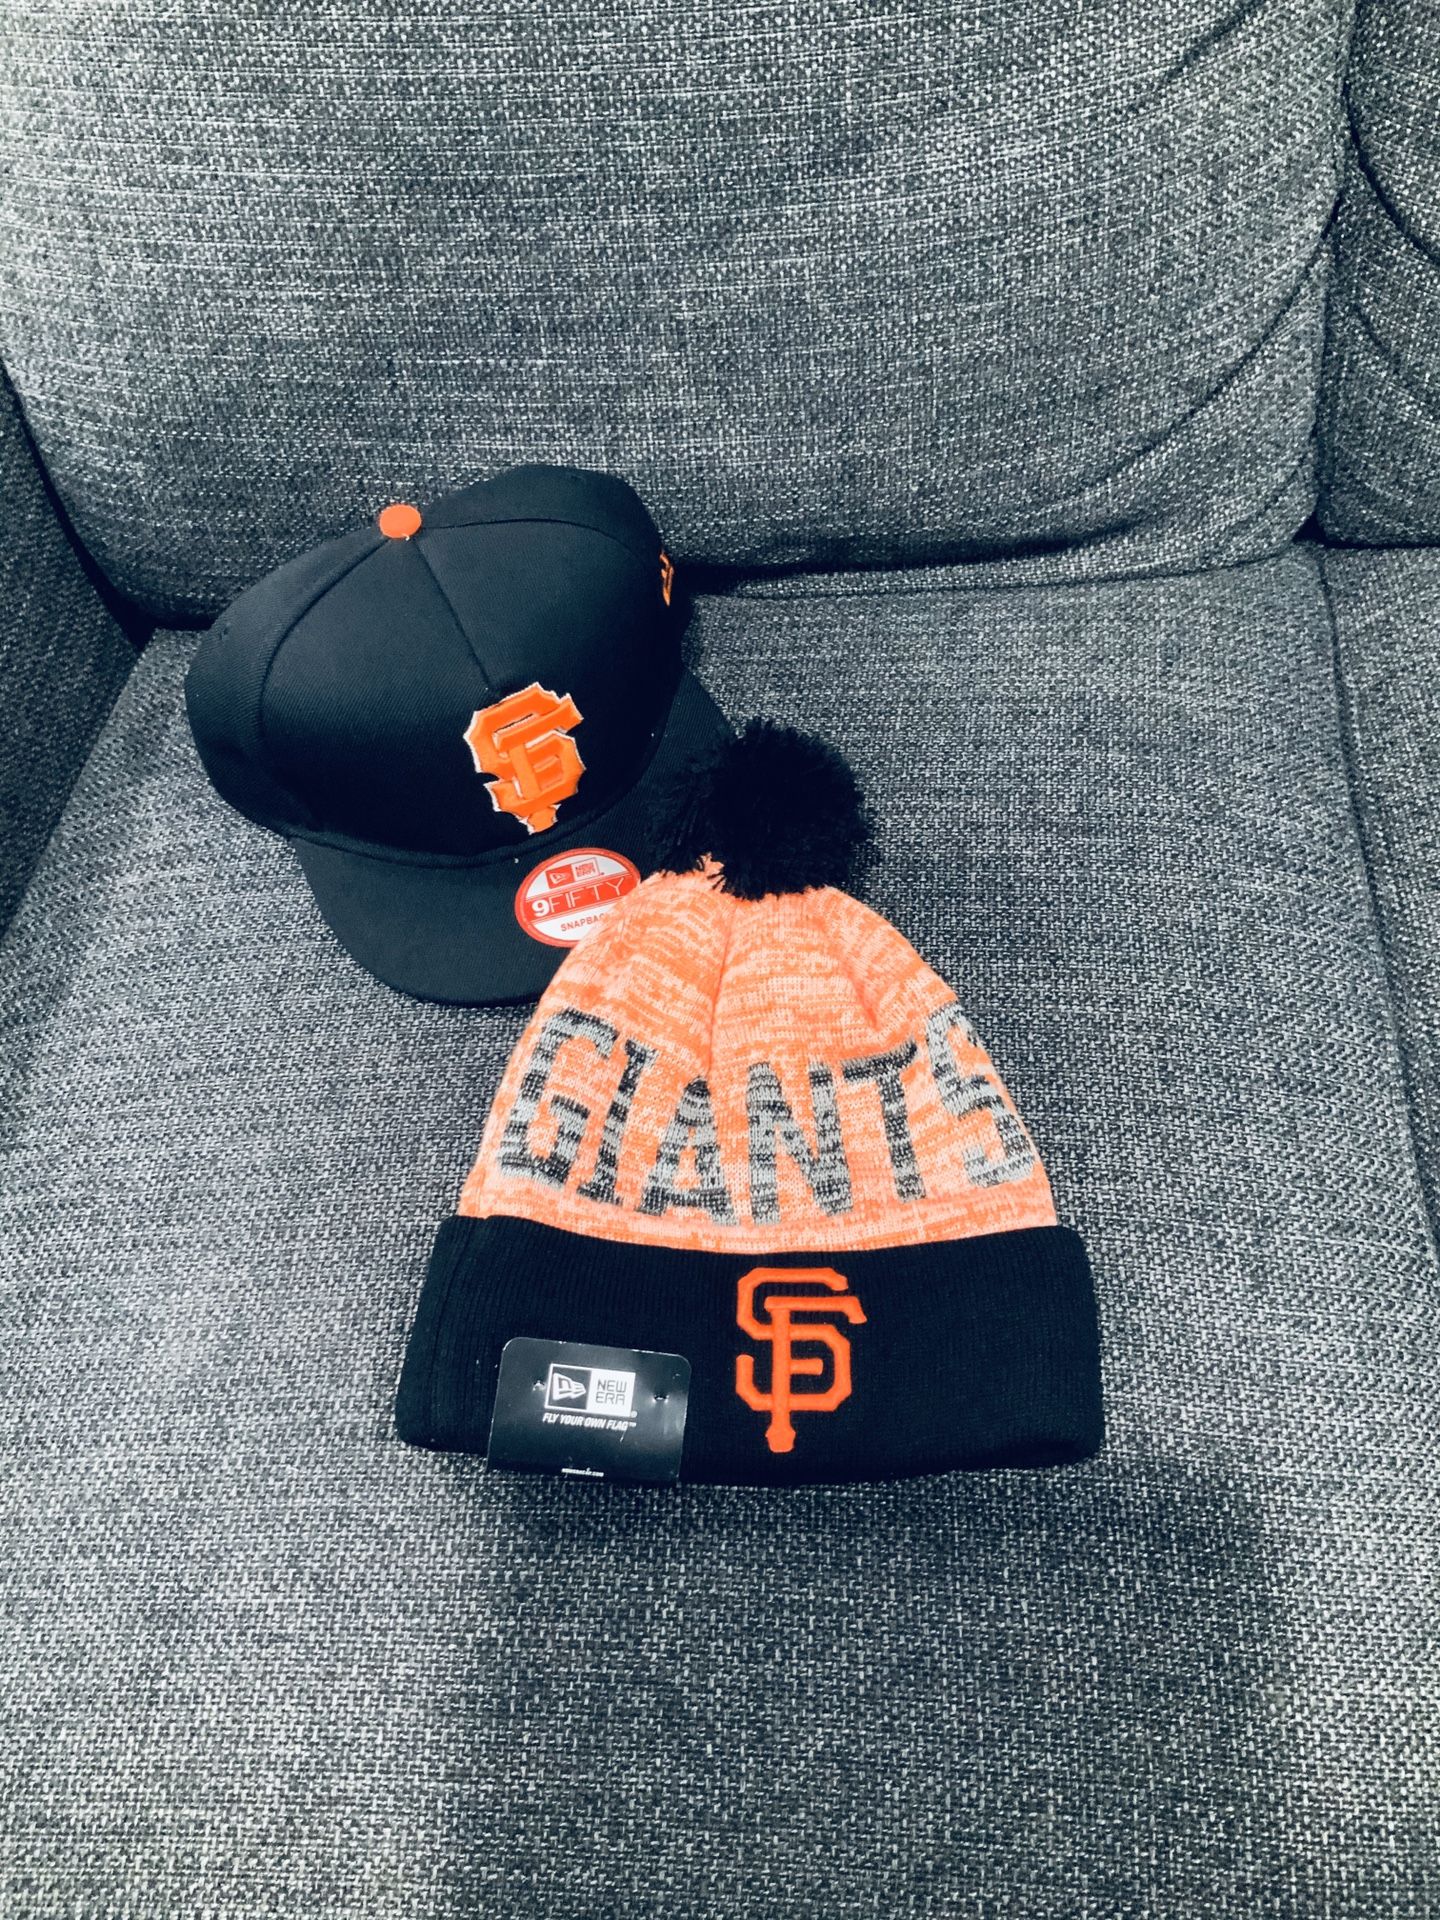 San Francisco Giants beanie & SnapBack ⚾️